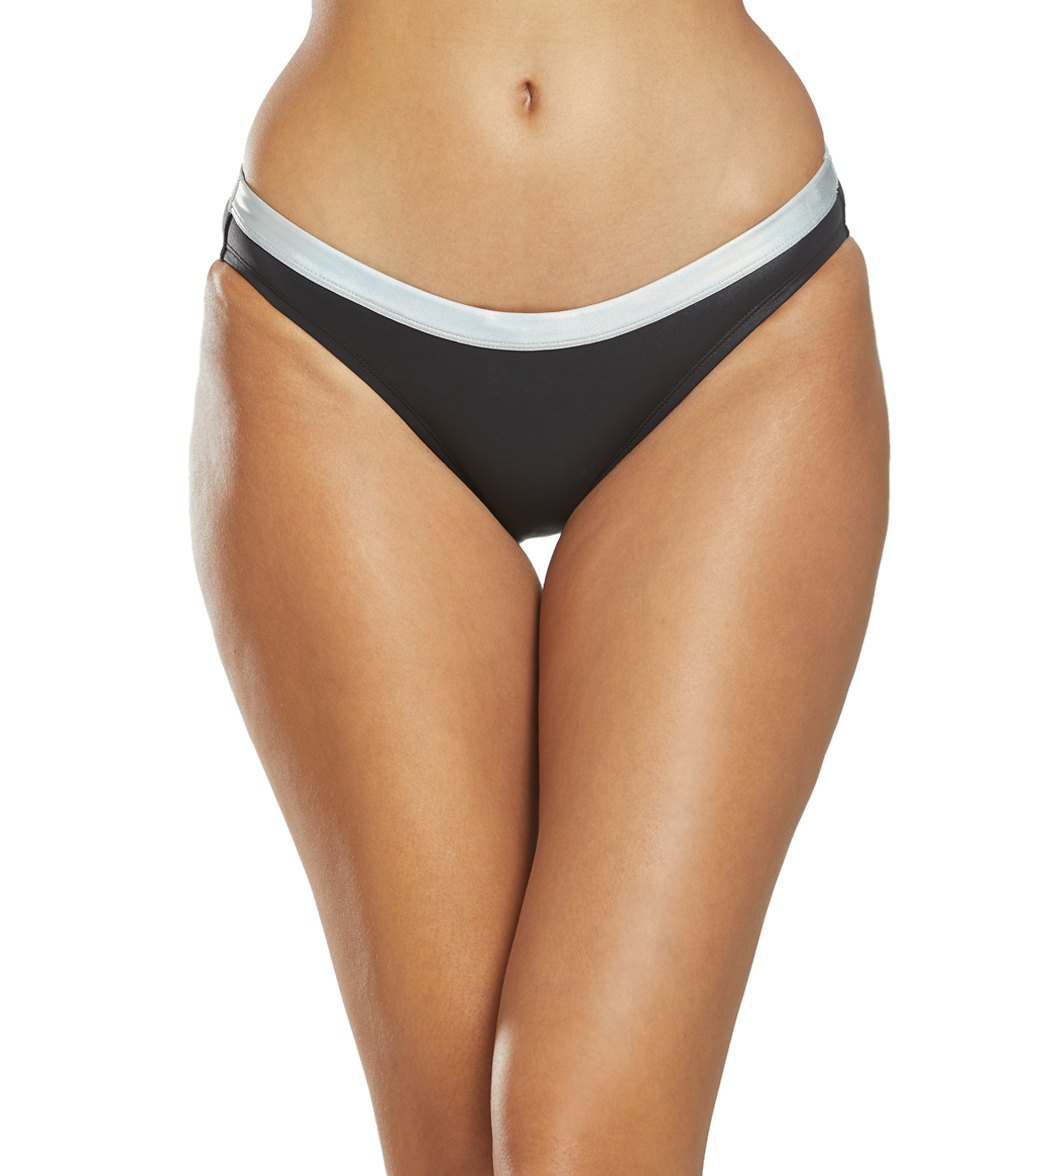 Nike Women's Flash Sport Bikini Bottom at SwimOutlet.com